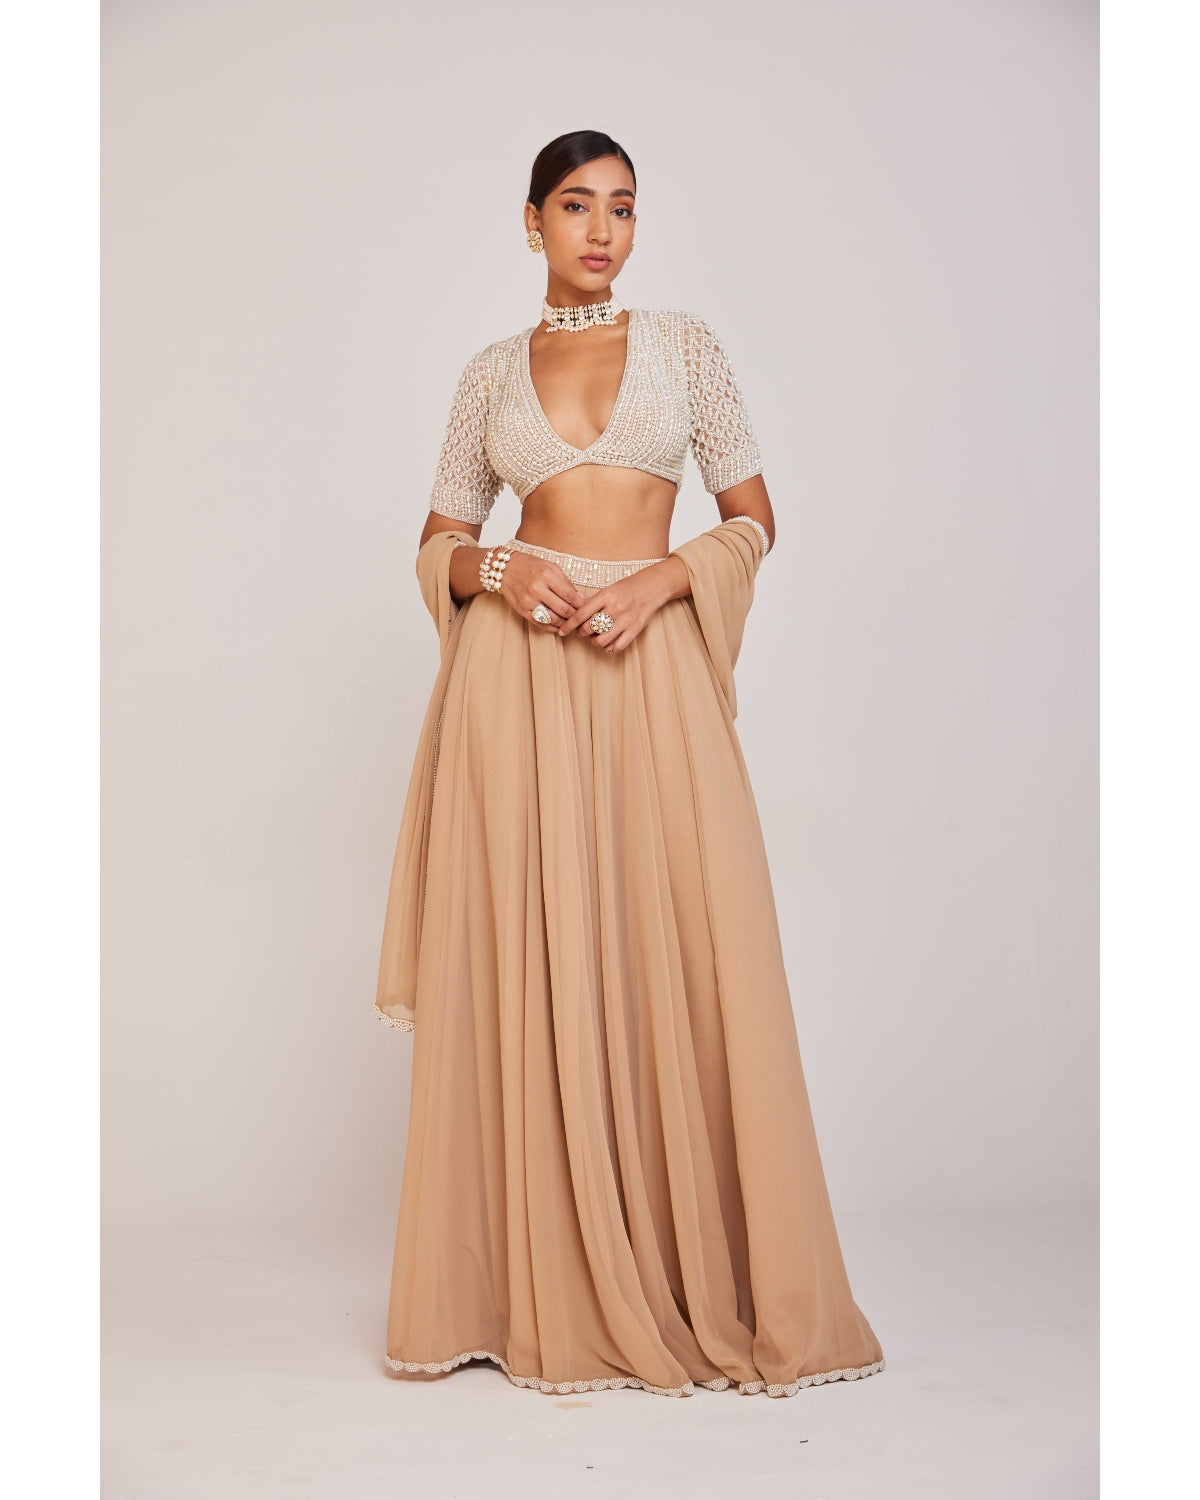 Pearl Embellished Blouse With Lehenga Pant Set by VVani by Vani Vats